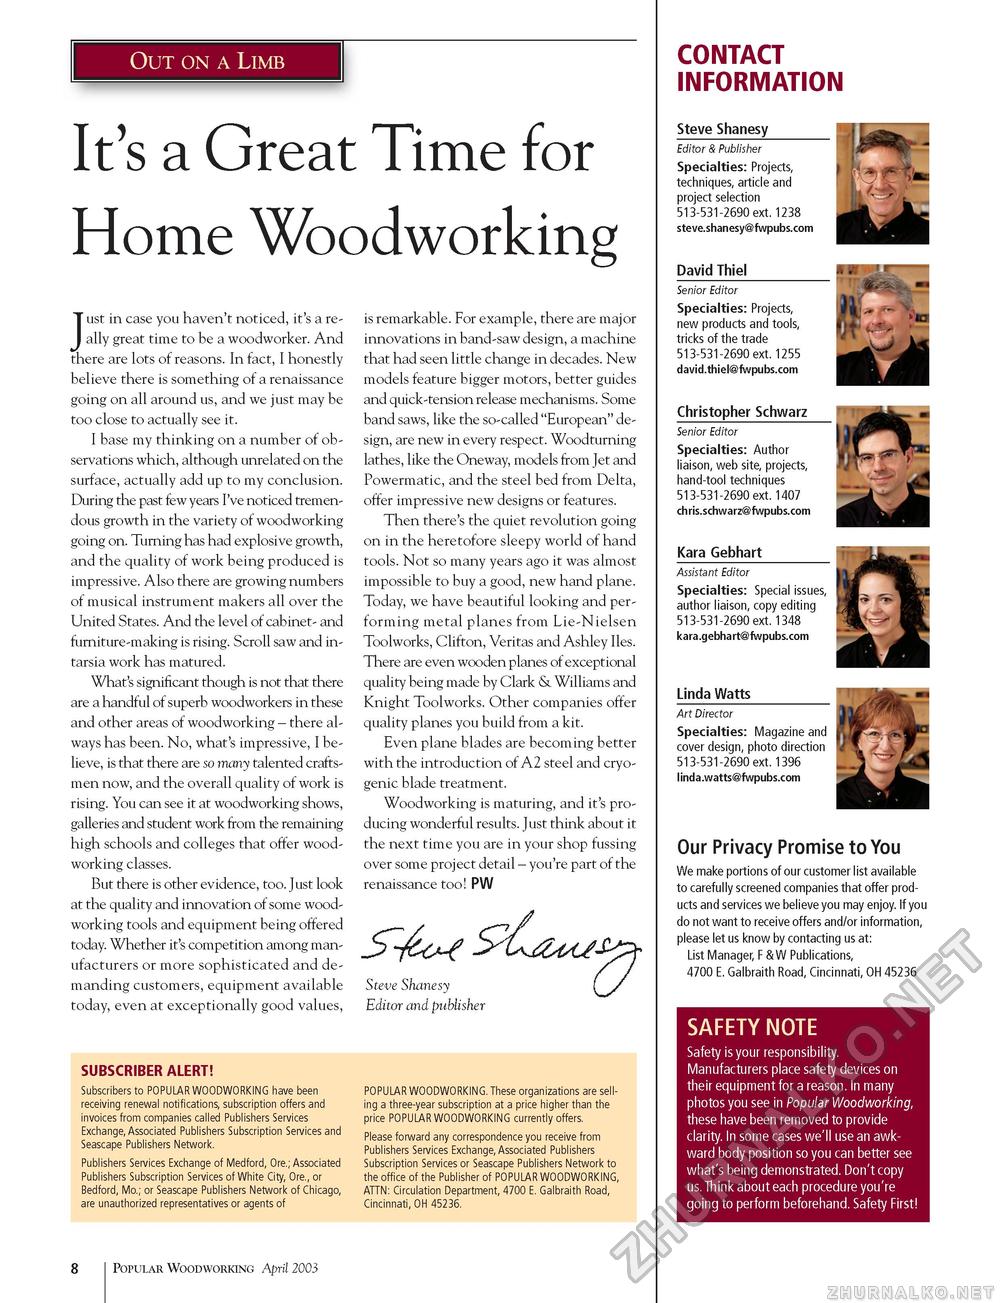 Popular Woodworking 2003-04  133,  8